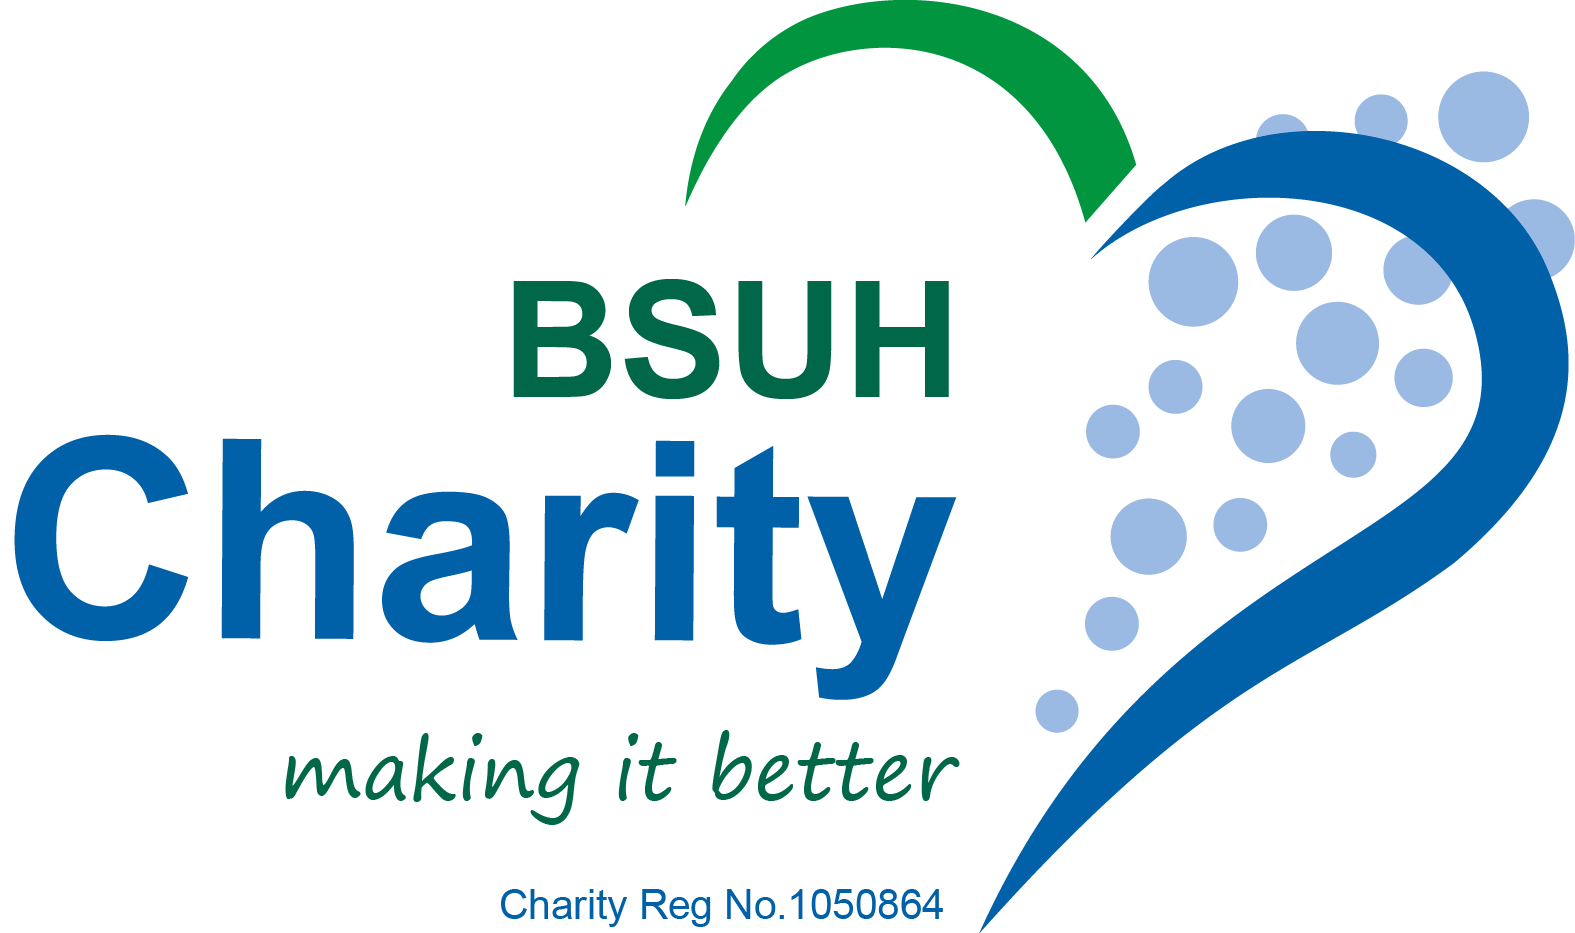 BSUH Charity